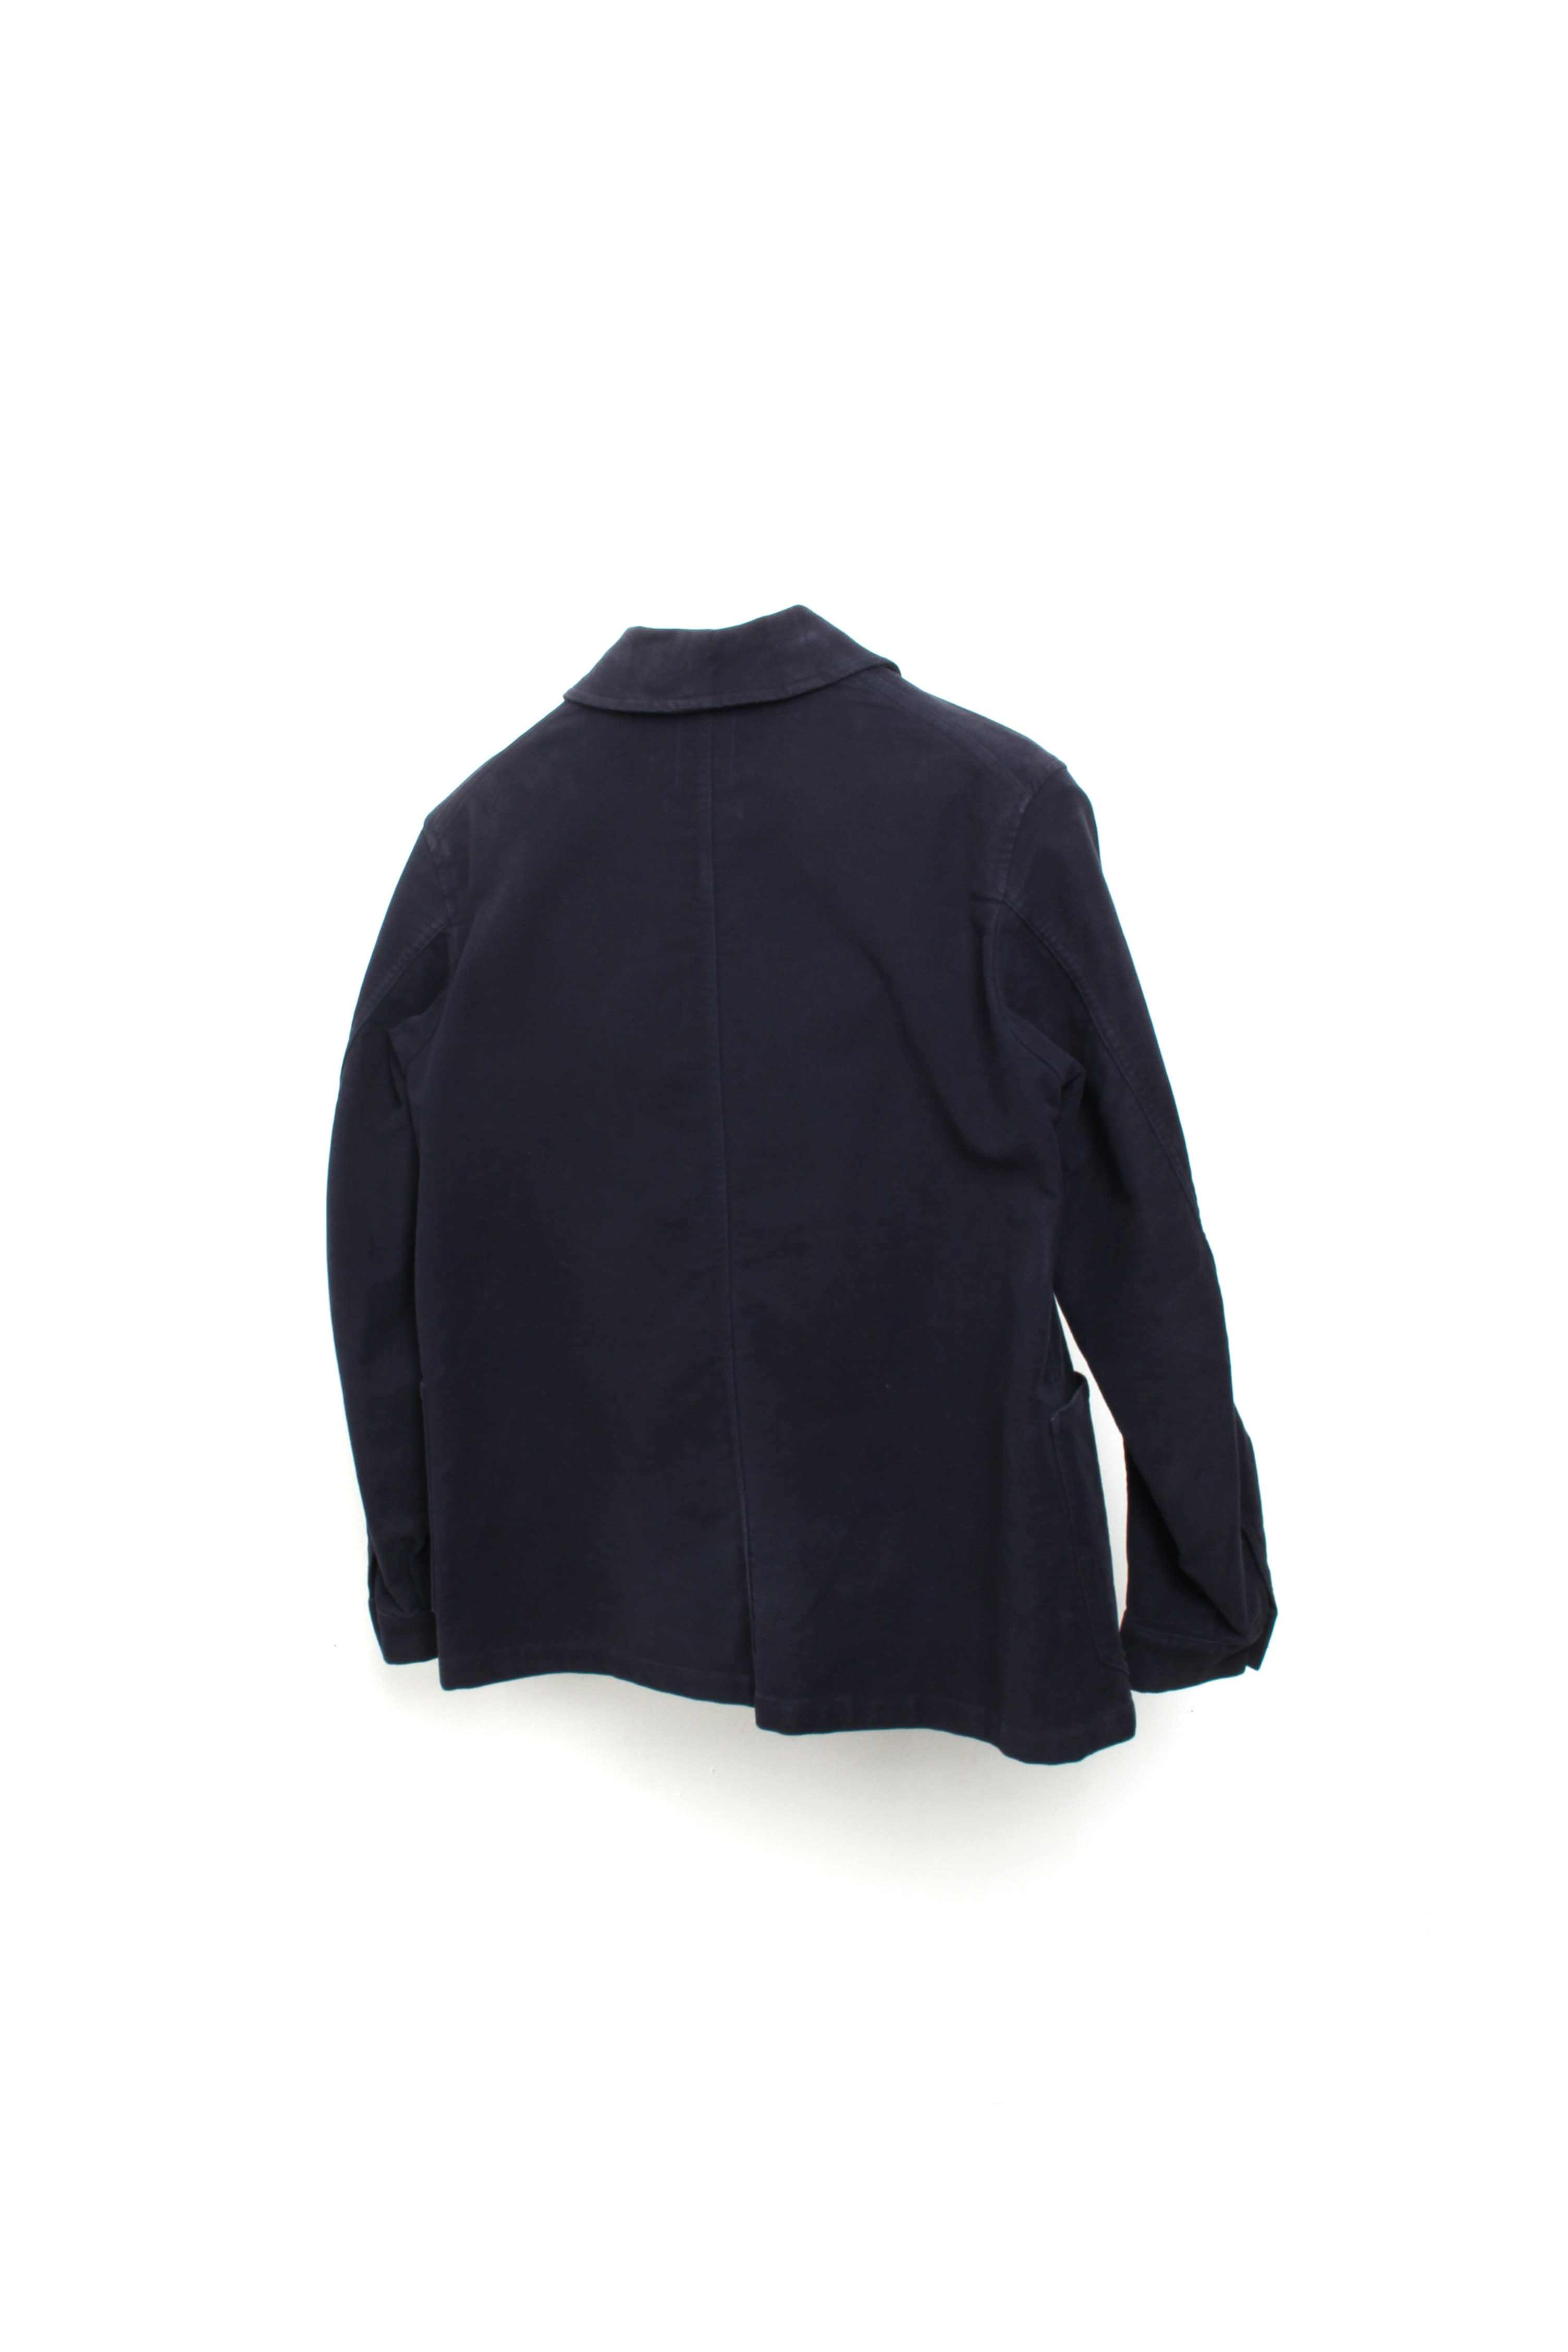 DANTON x UNITED ARROWS Cotton Jacket(38)